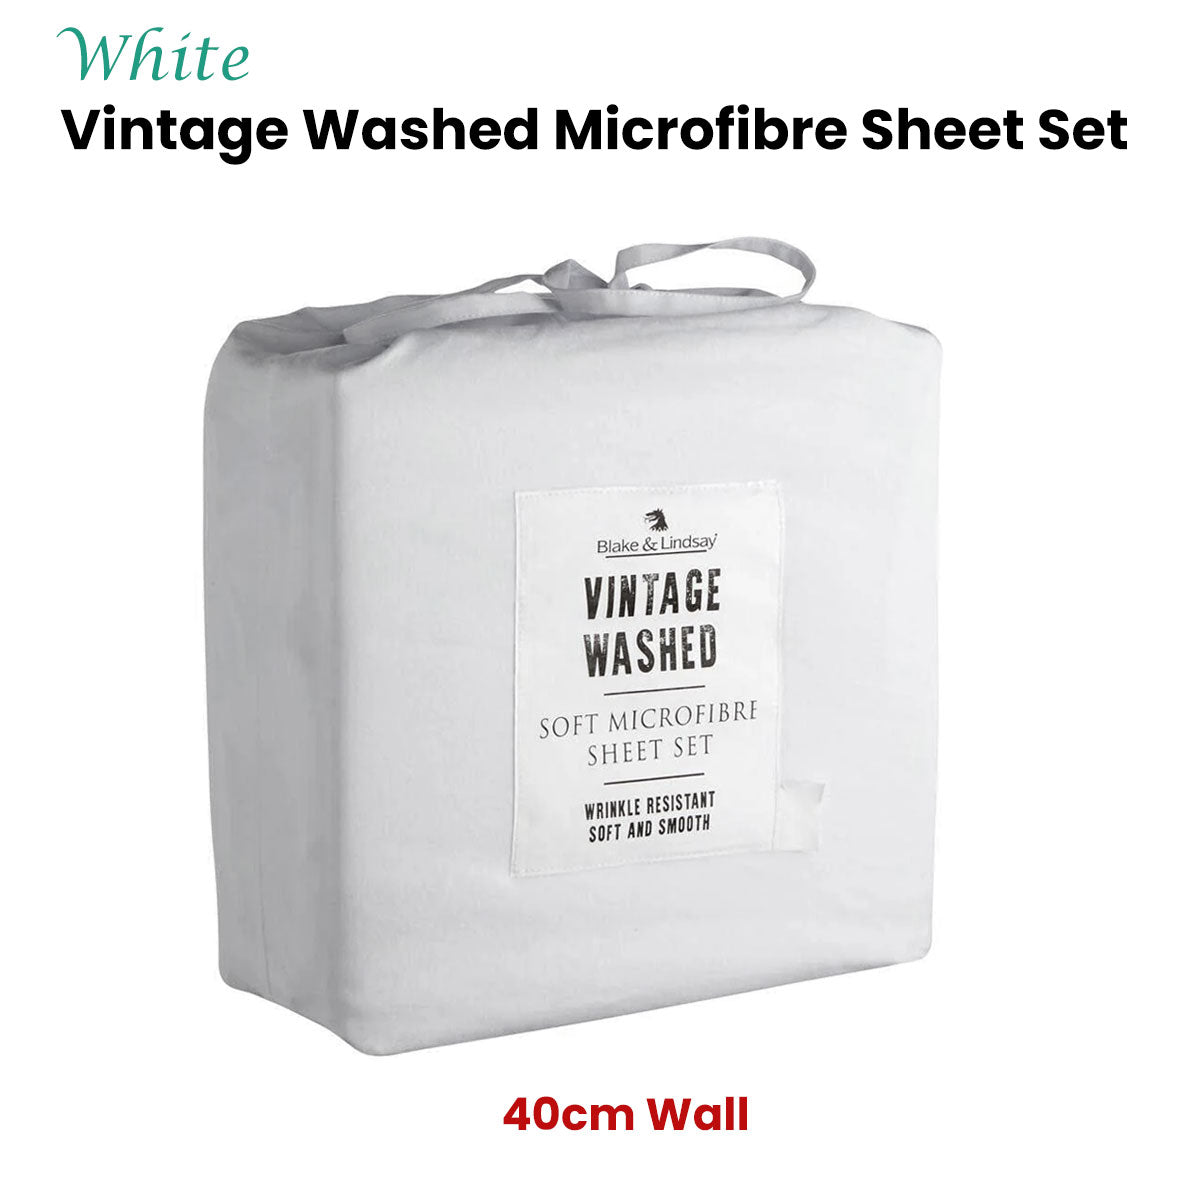 Blake & Lindsay White Vintage Washed Microfibre Sheet Set 40cm Wall King